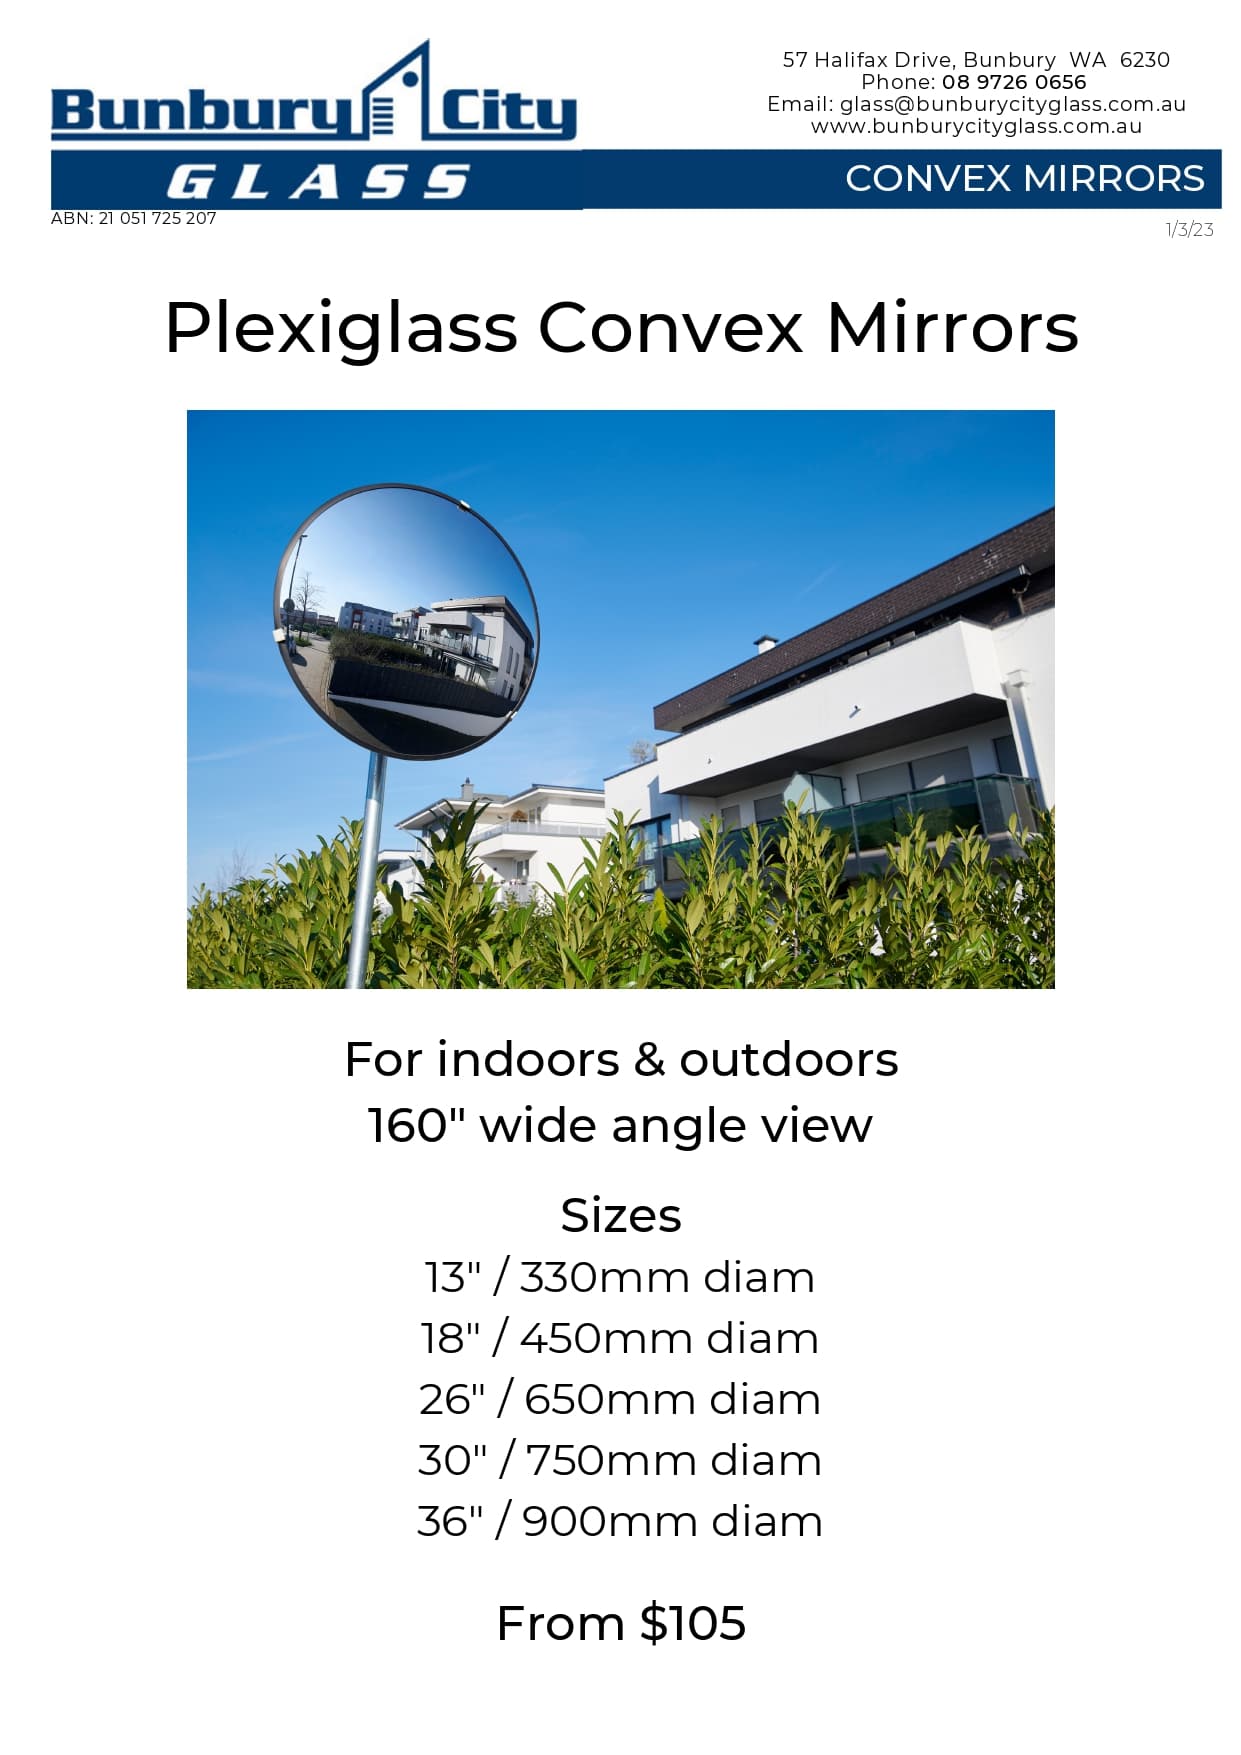 Bunbury City Glass | Convex Mirrors